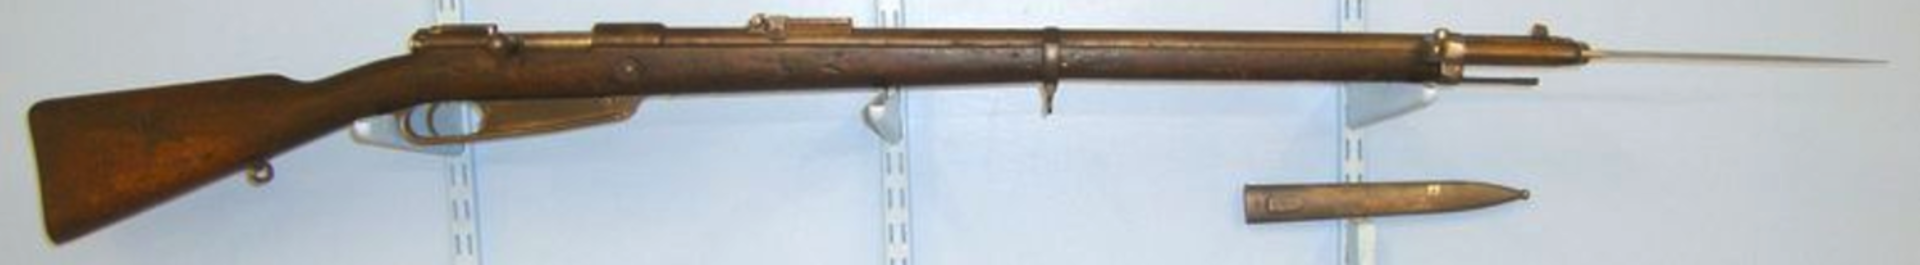 RARE, WW1 Era Austrian Steyr G88, 7.92mm Calibre, Commission Rifle 1894